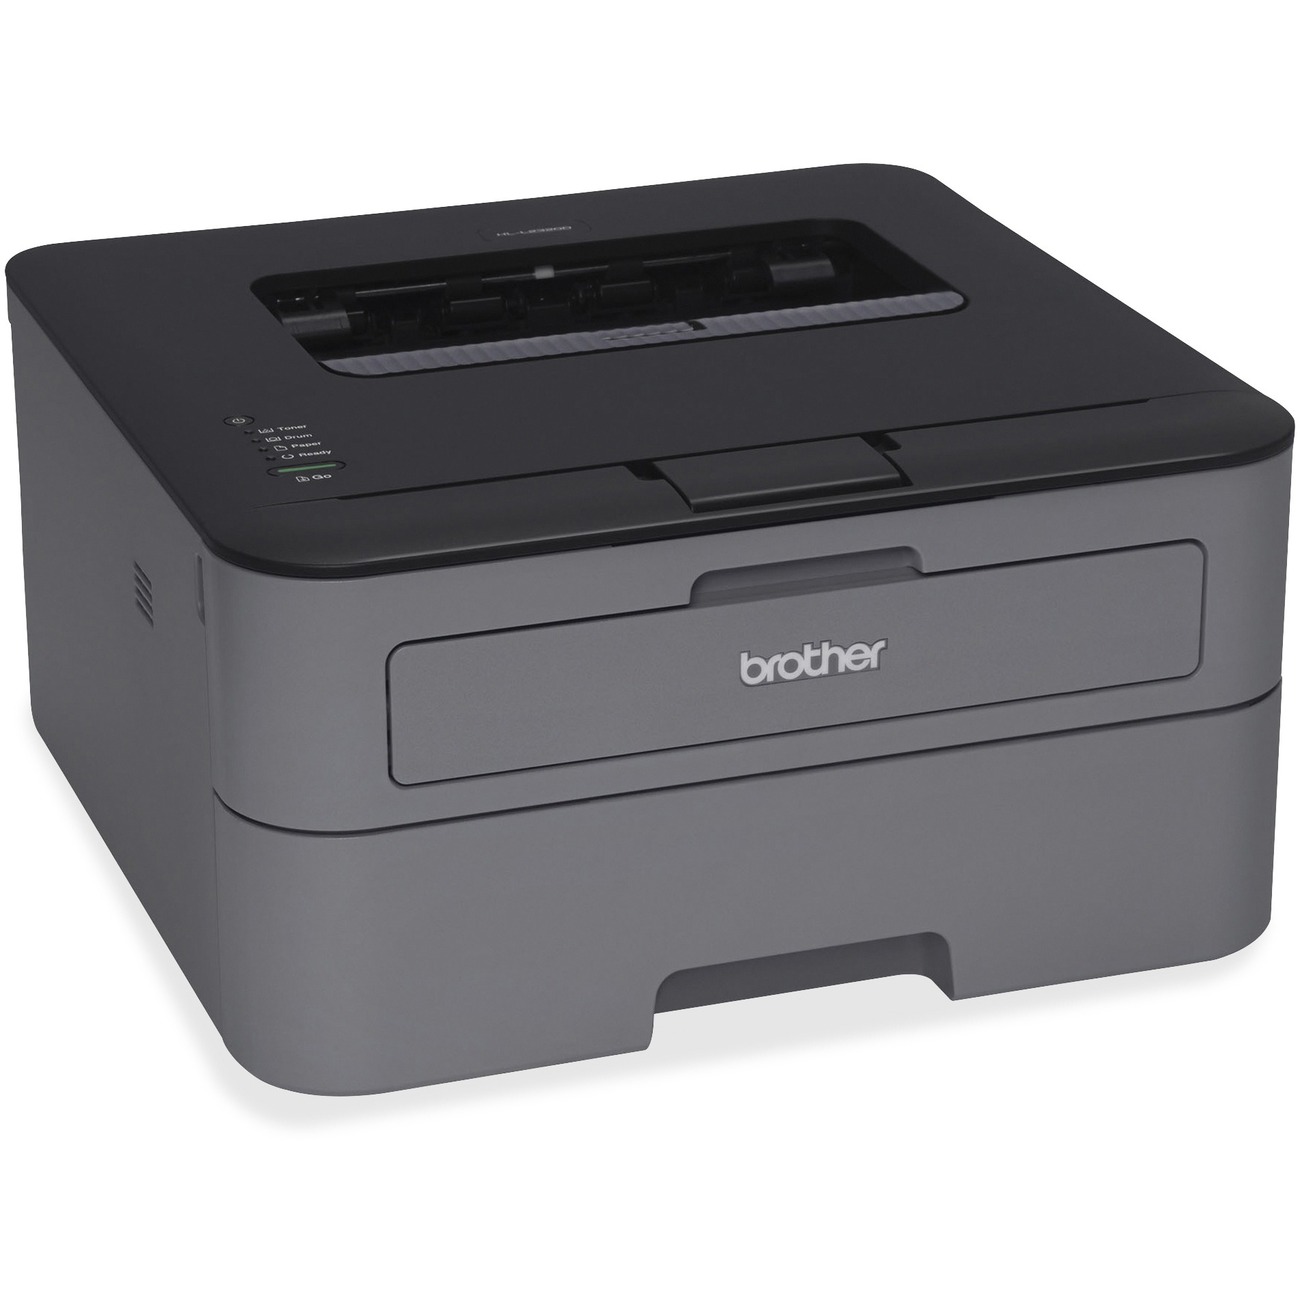 Brother HL-L2300D Laser Printer - Monochrome - Duplex - Printer - 2400 x 600 dpi - 26 ppm Mono Print - USB 2.0 - Office Supplies